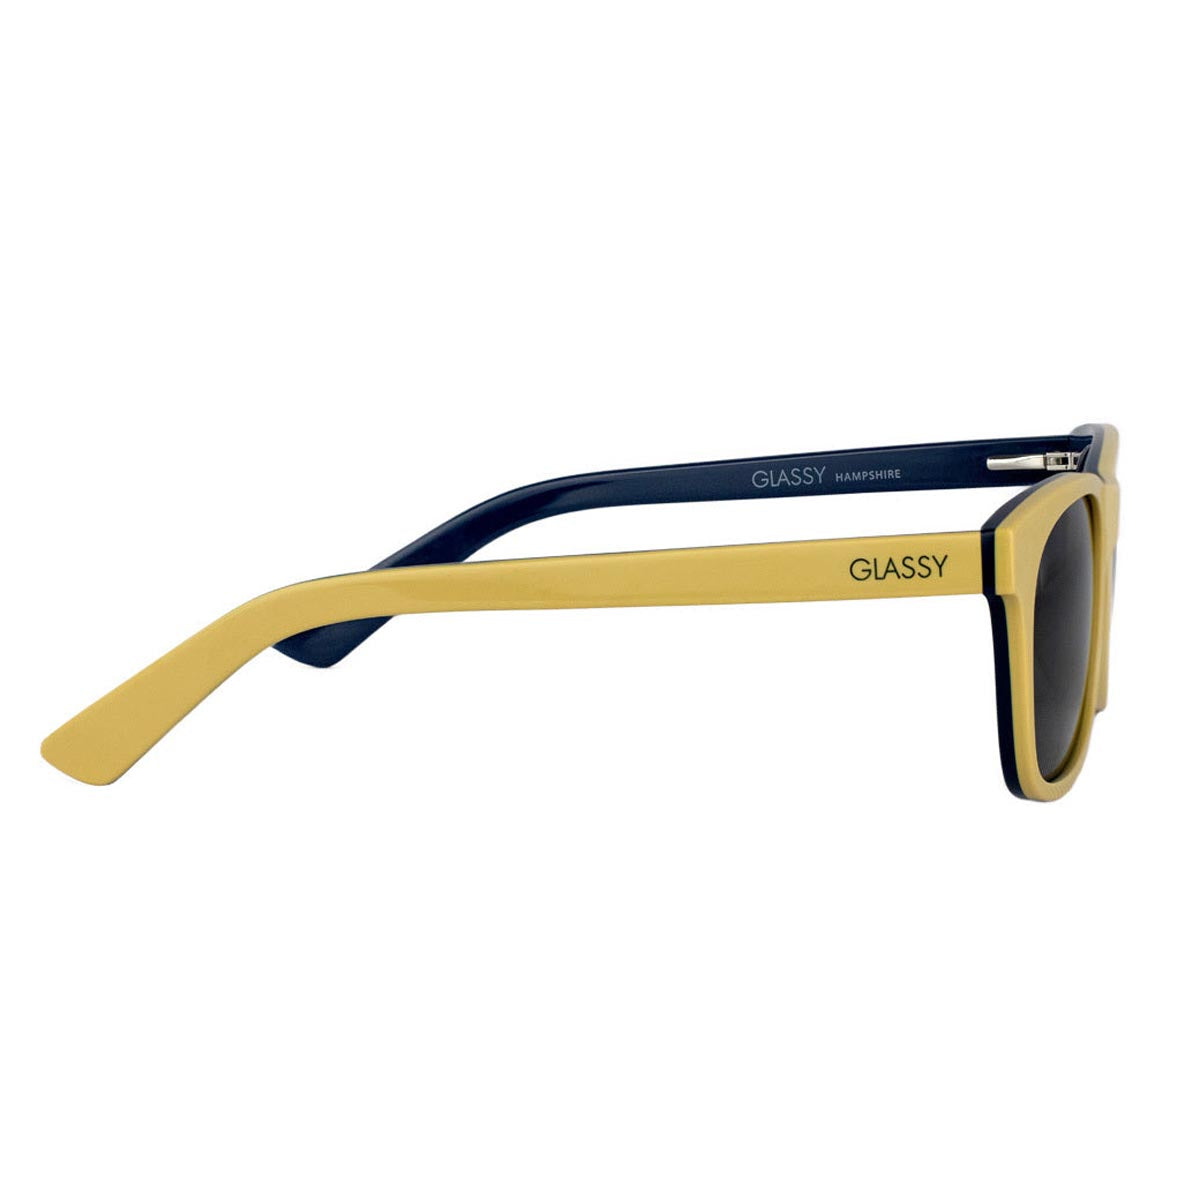 Glassy x Coors Banquet Hampshire Sunglasses - Buff image 5